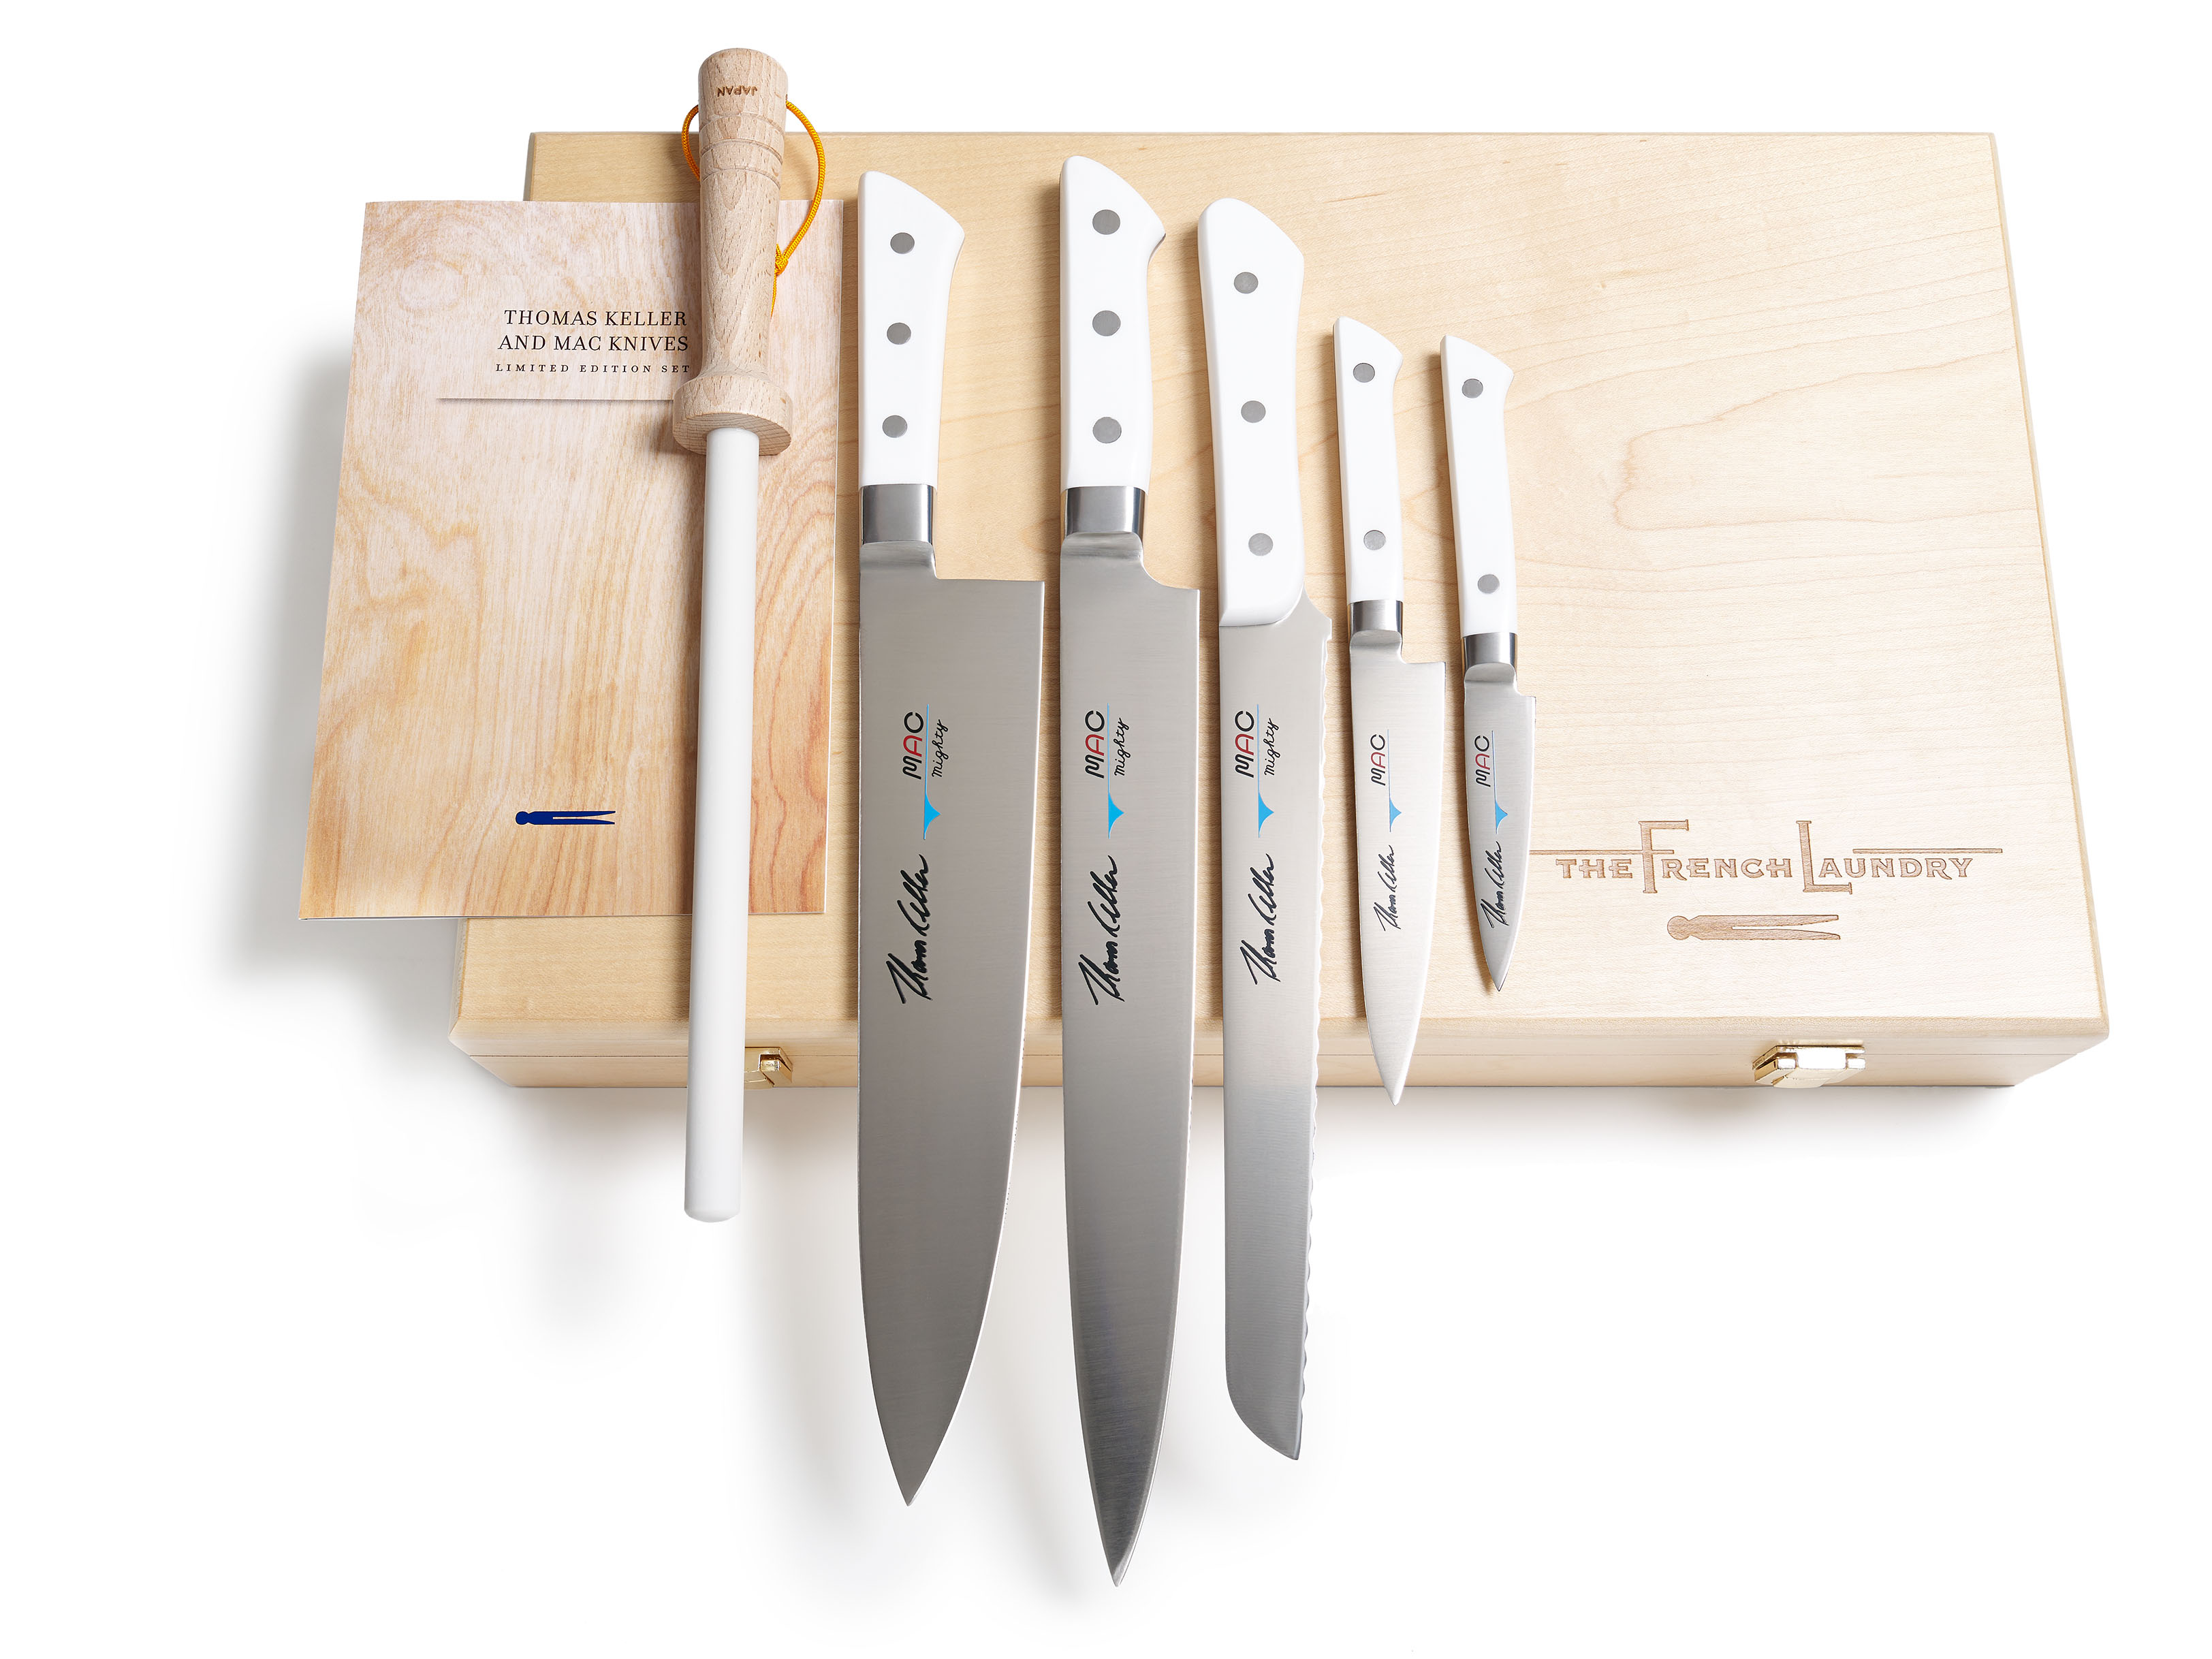 Thomas Keller's Limited Edition MAC Knife Set